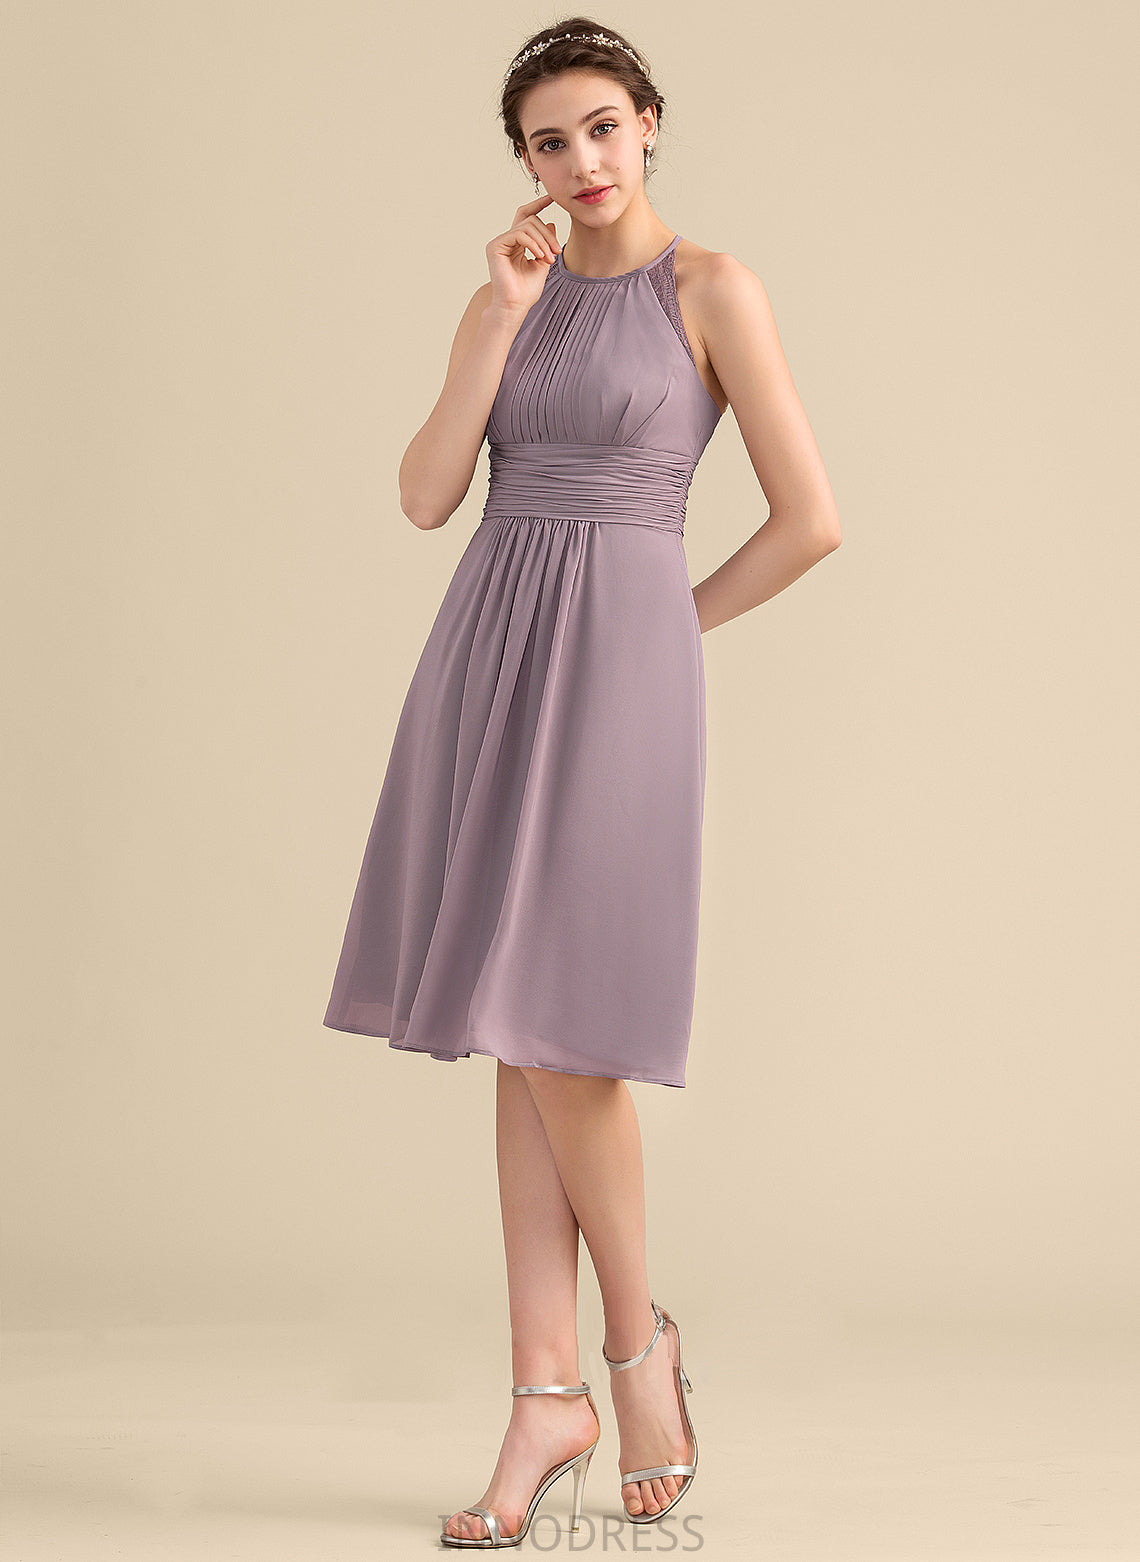 Silhouette Length Fabric Embellishment A-Line Knee-Length ScoopNeck Neckline Ruffle Noemi A-Line/Princess Sleeveless